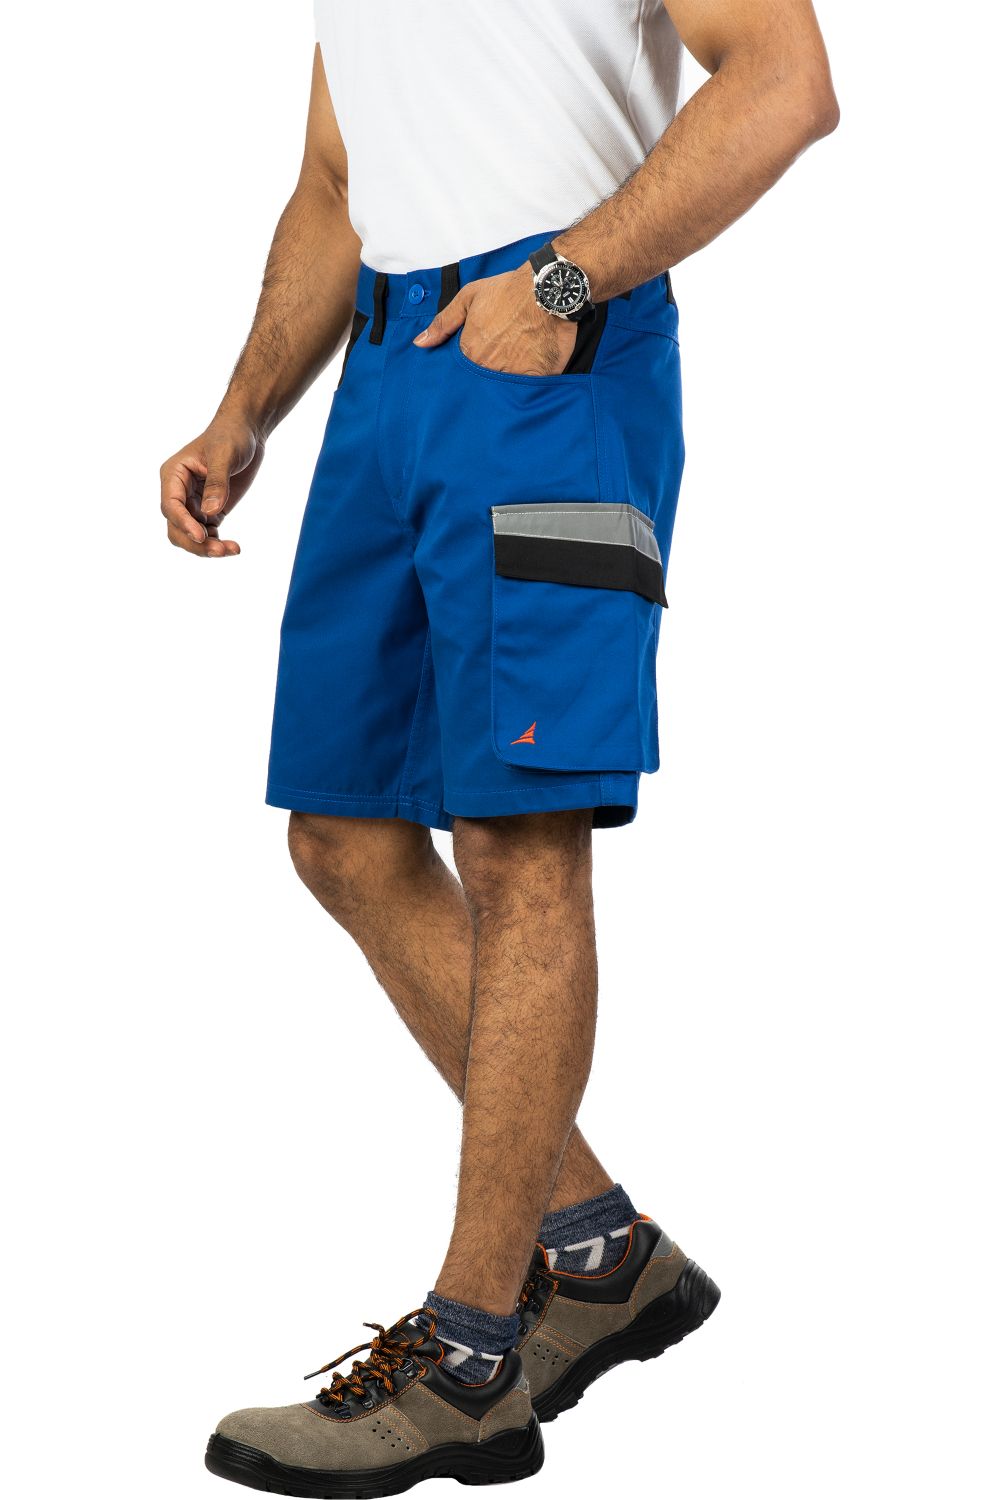 industrial design ergonomic blue-black shorts